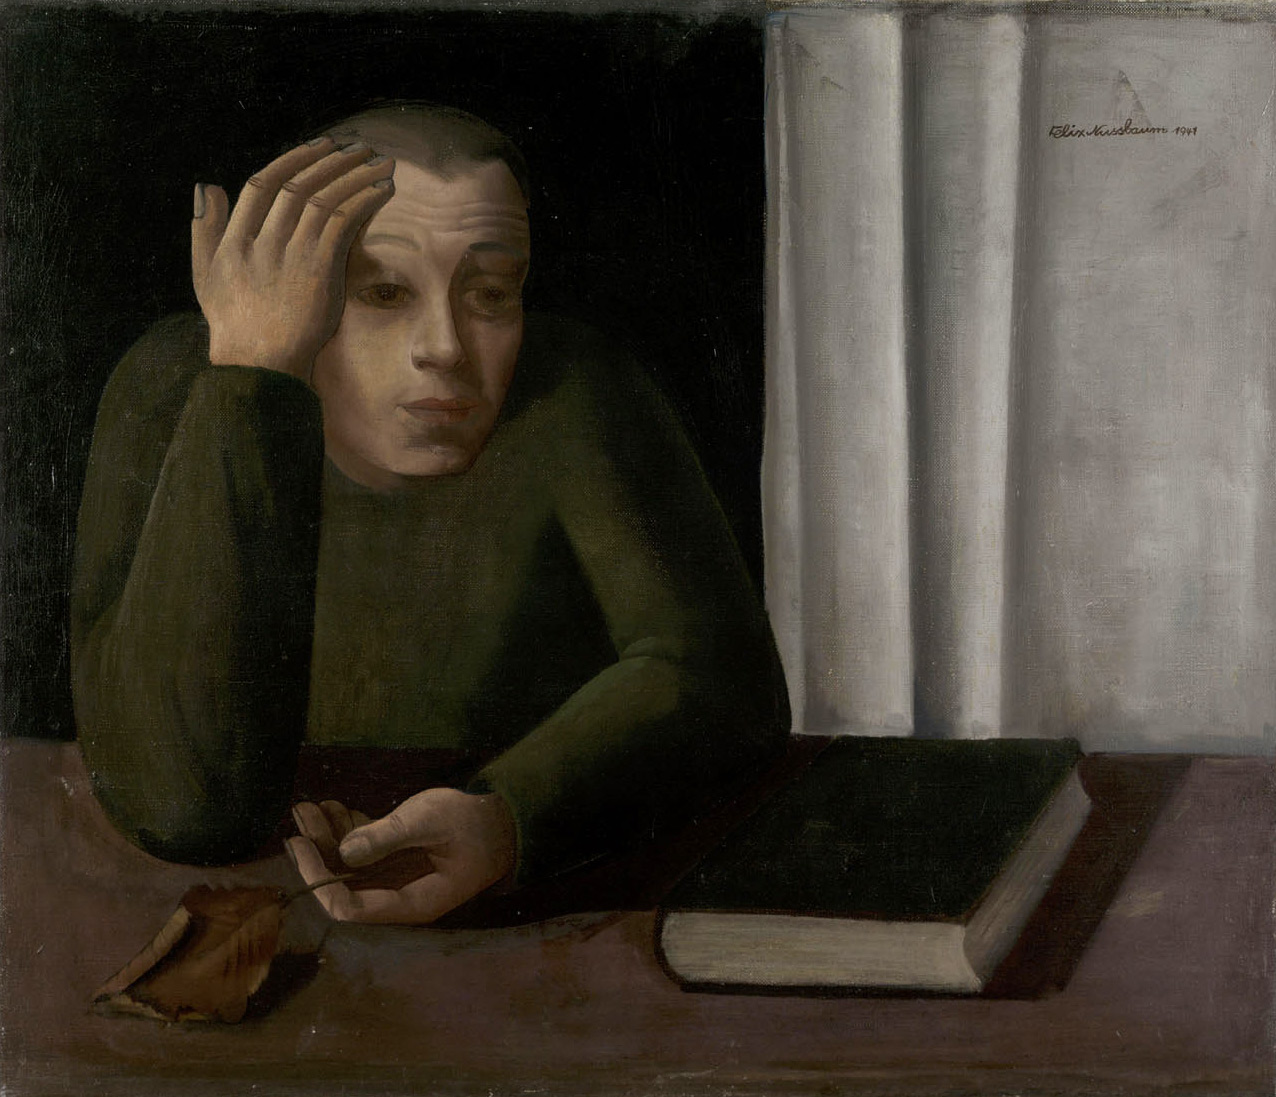 Felix Nussbaum. "Portrait of an Unidentified Man, 1941"